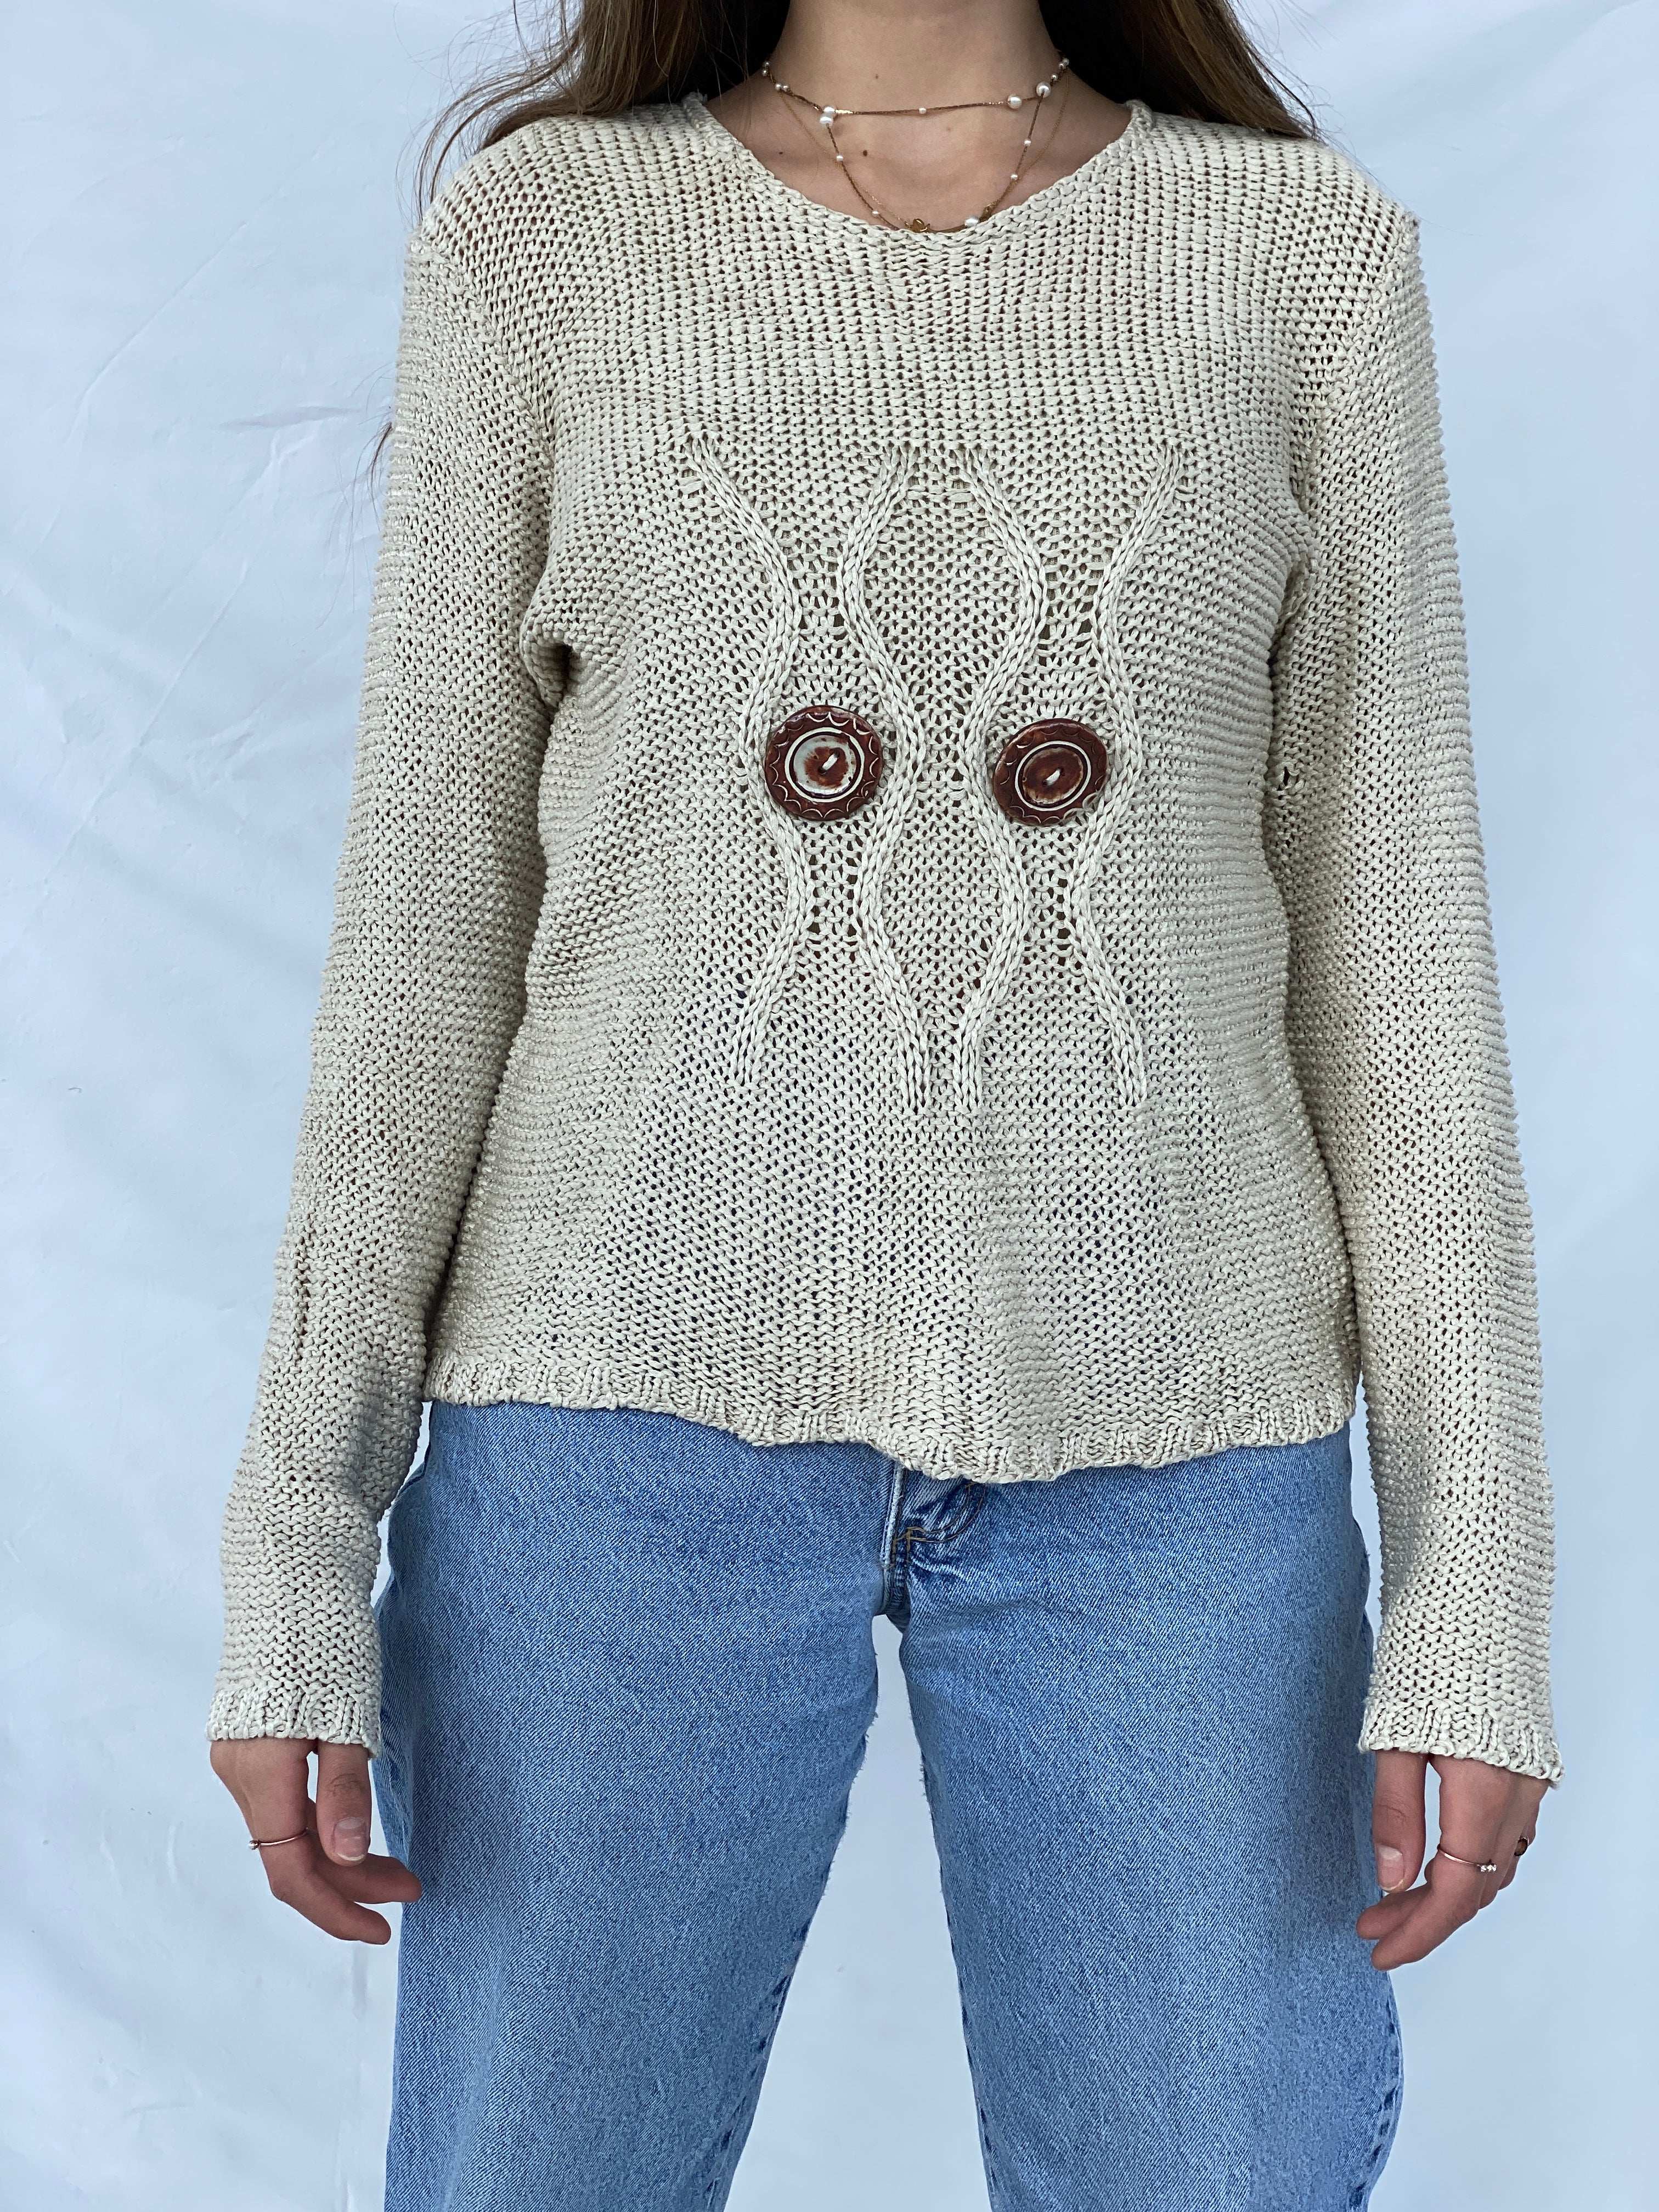 Vintage Cira Esposita Crochet Top - Size M - Balagan Vintage Full Sleeve Top 00s, 90s, full sleeve top, Mira, NEW IN